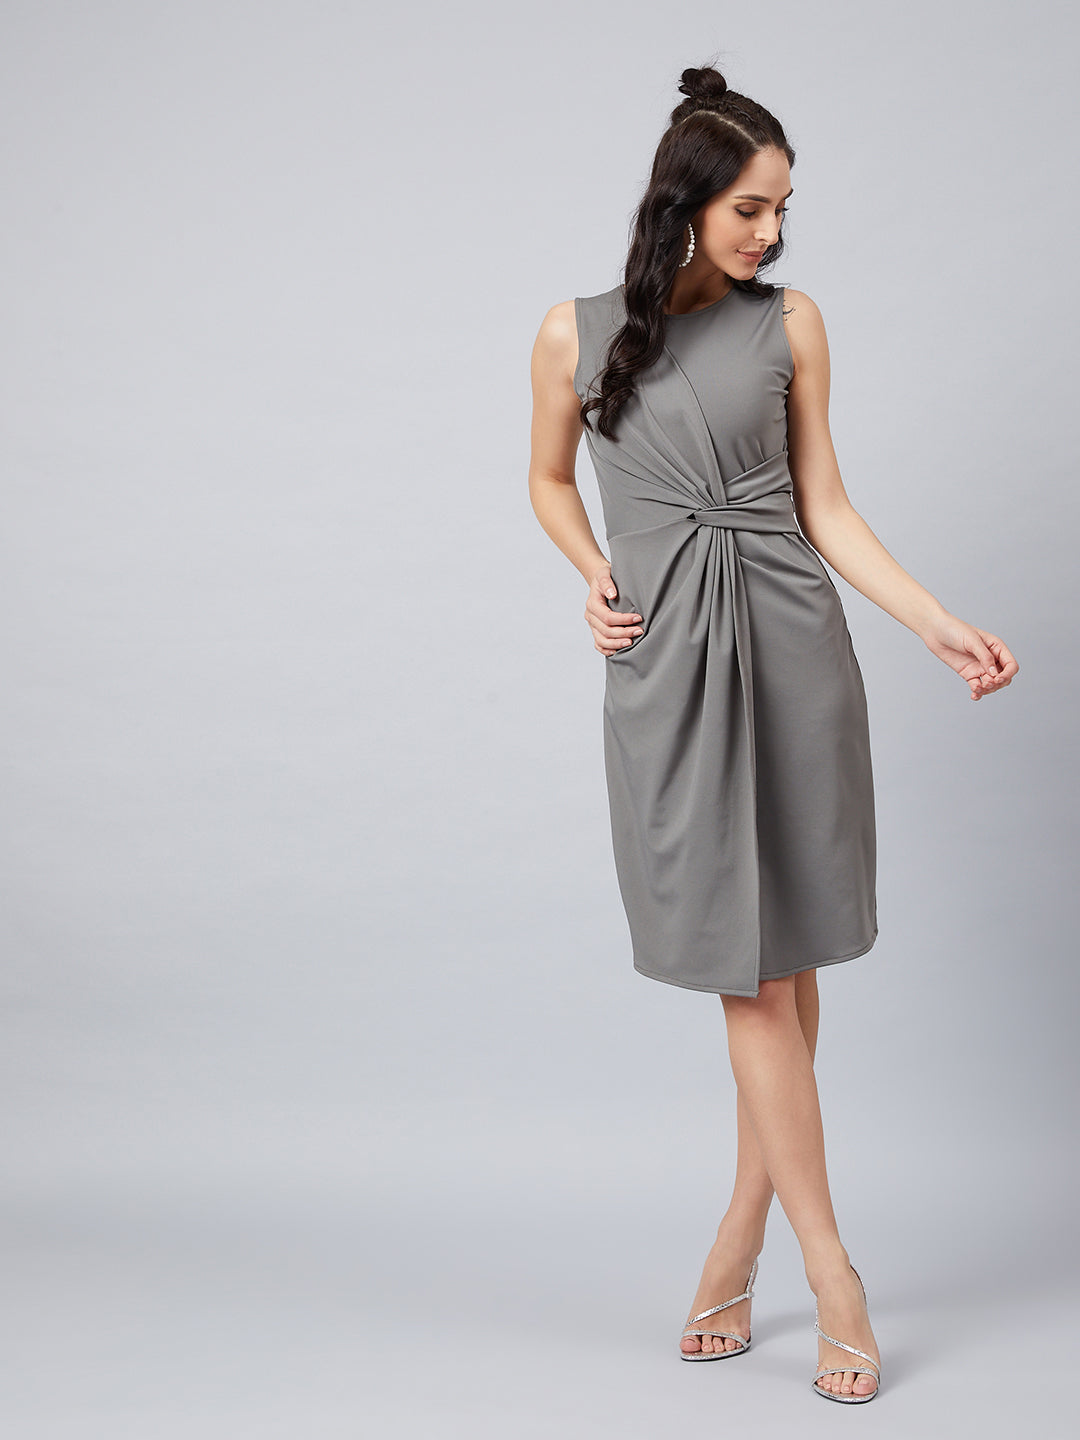 Athena Grey Sheath Dress - Athena Lifestyle